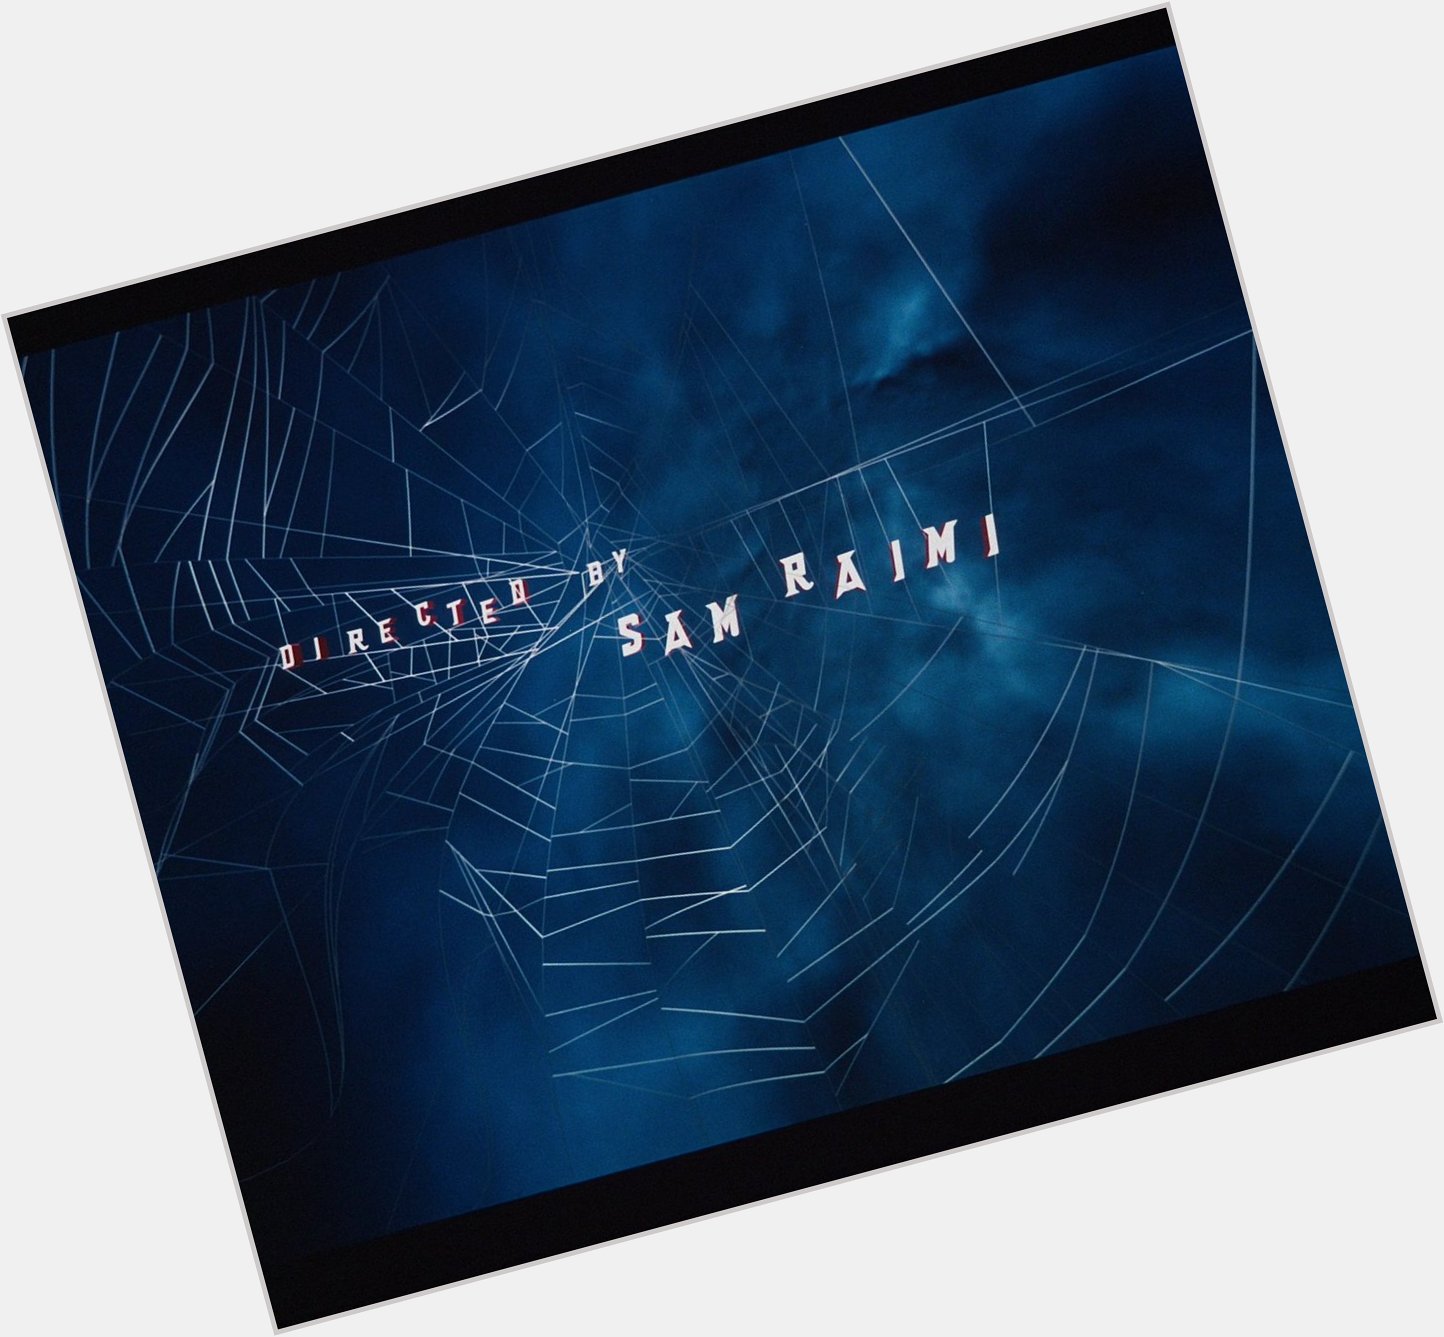 Happy birthday, Sam Raimi! 